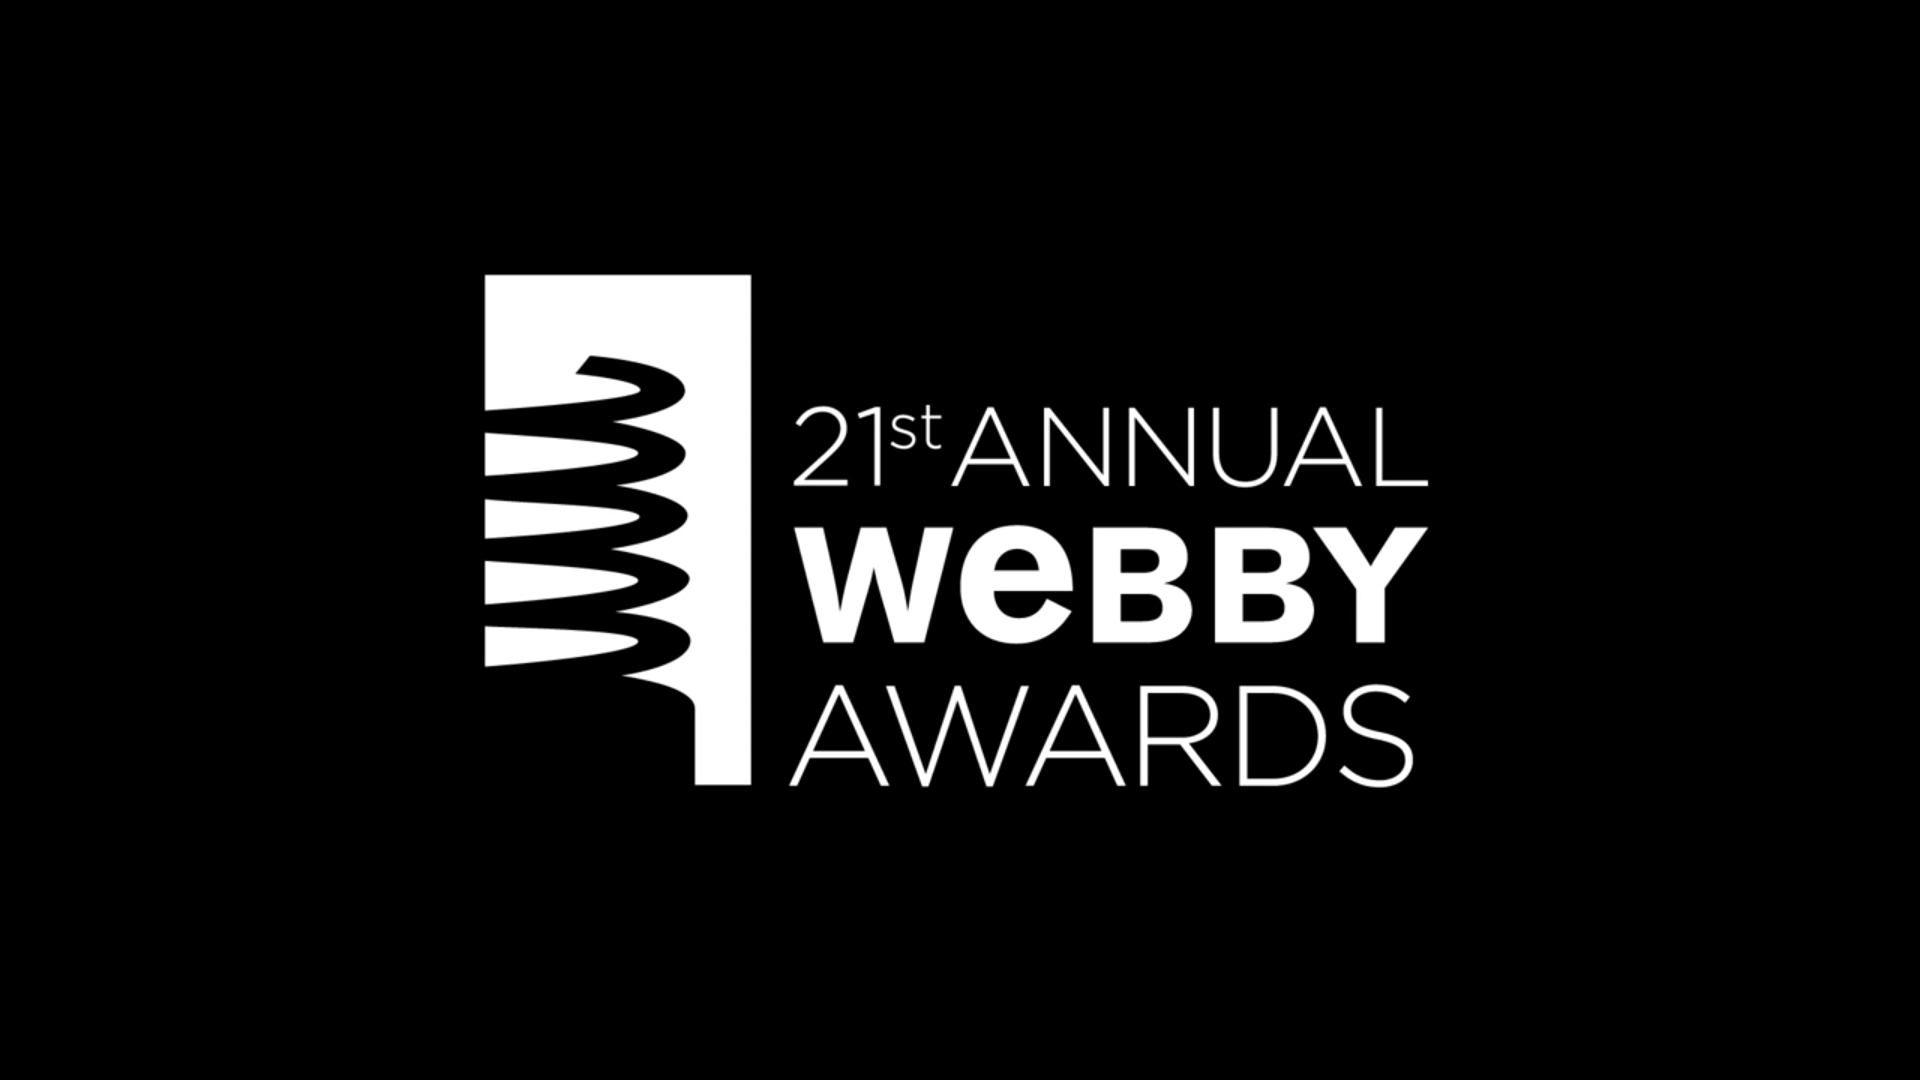 21st Annual Webby Awards. Photo by: Webby Awards / YouTube